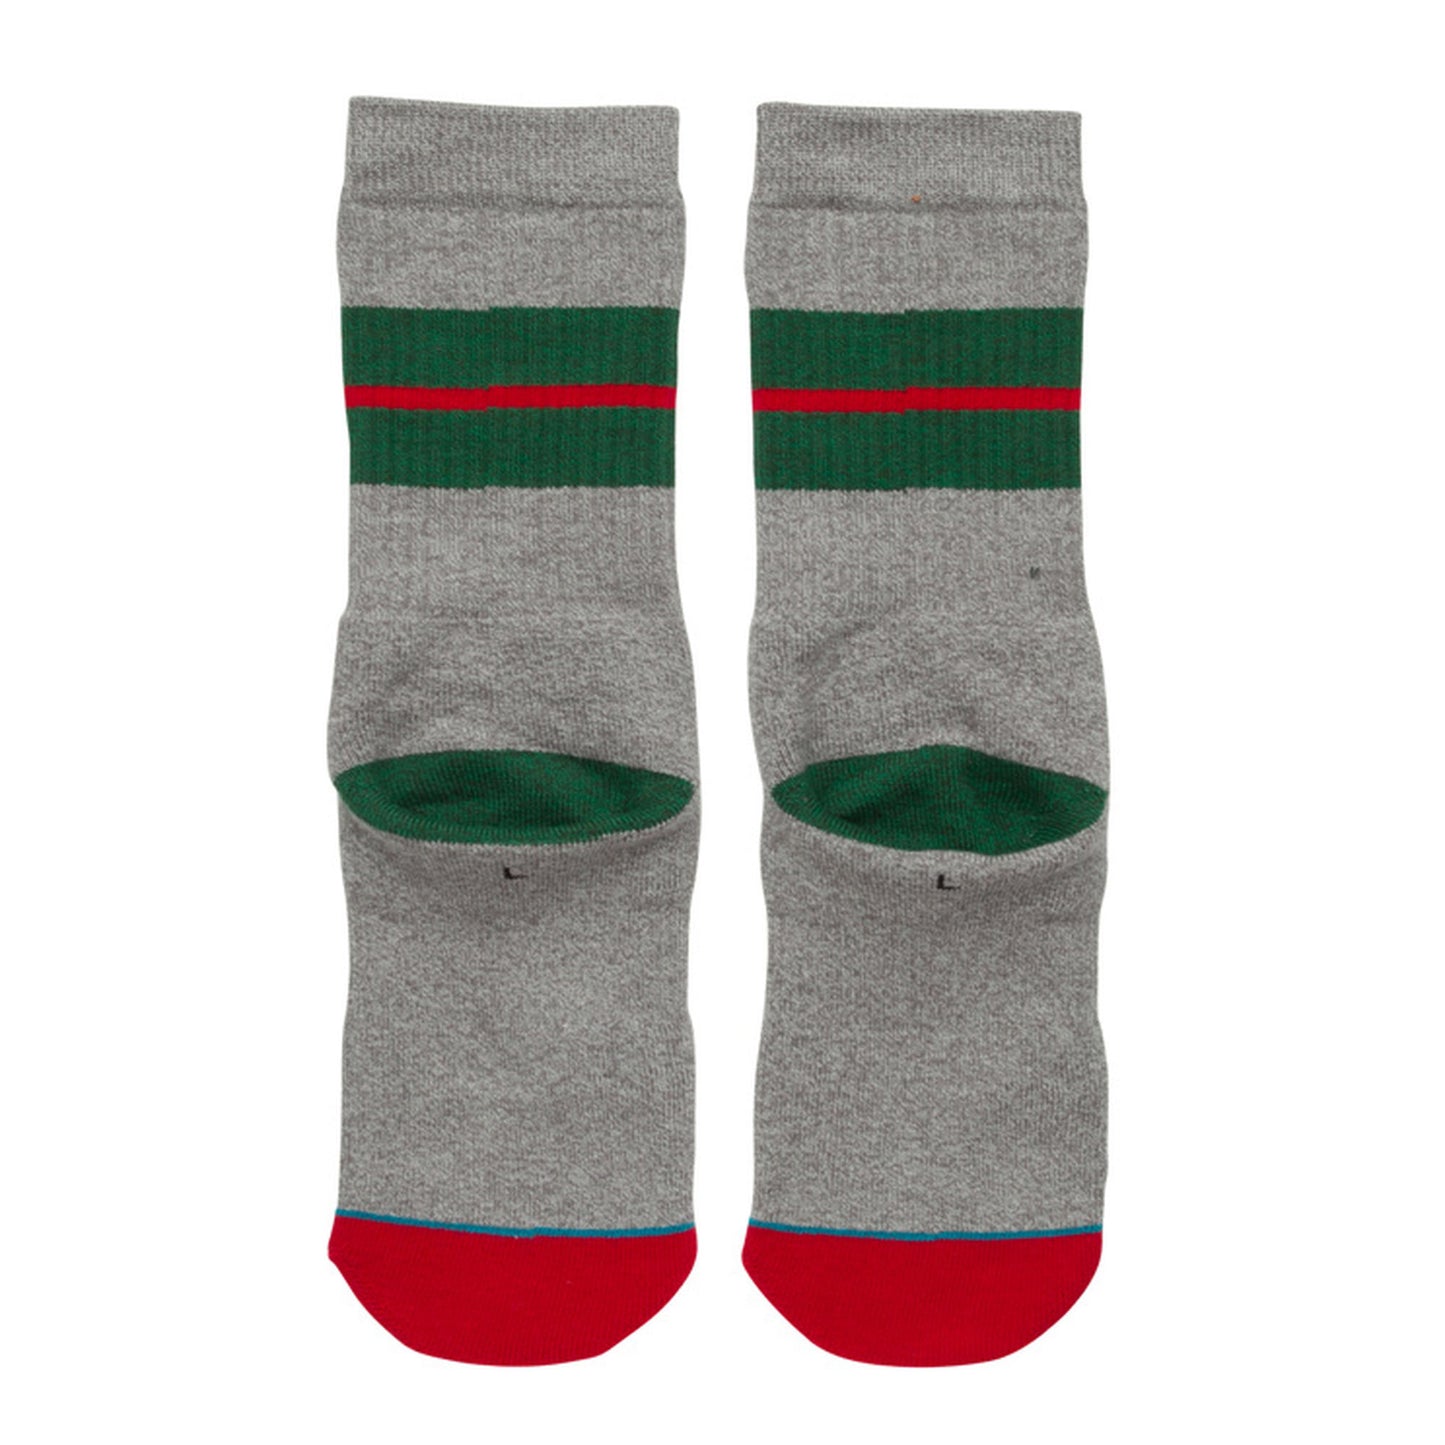 Stance - Sequoia Wool Men's Socks, Green - The Giant Peach